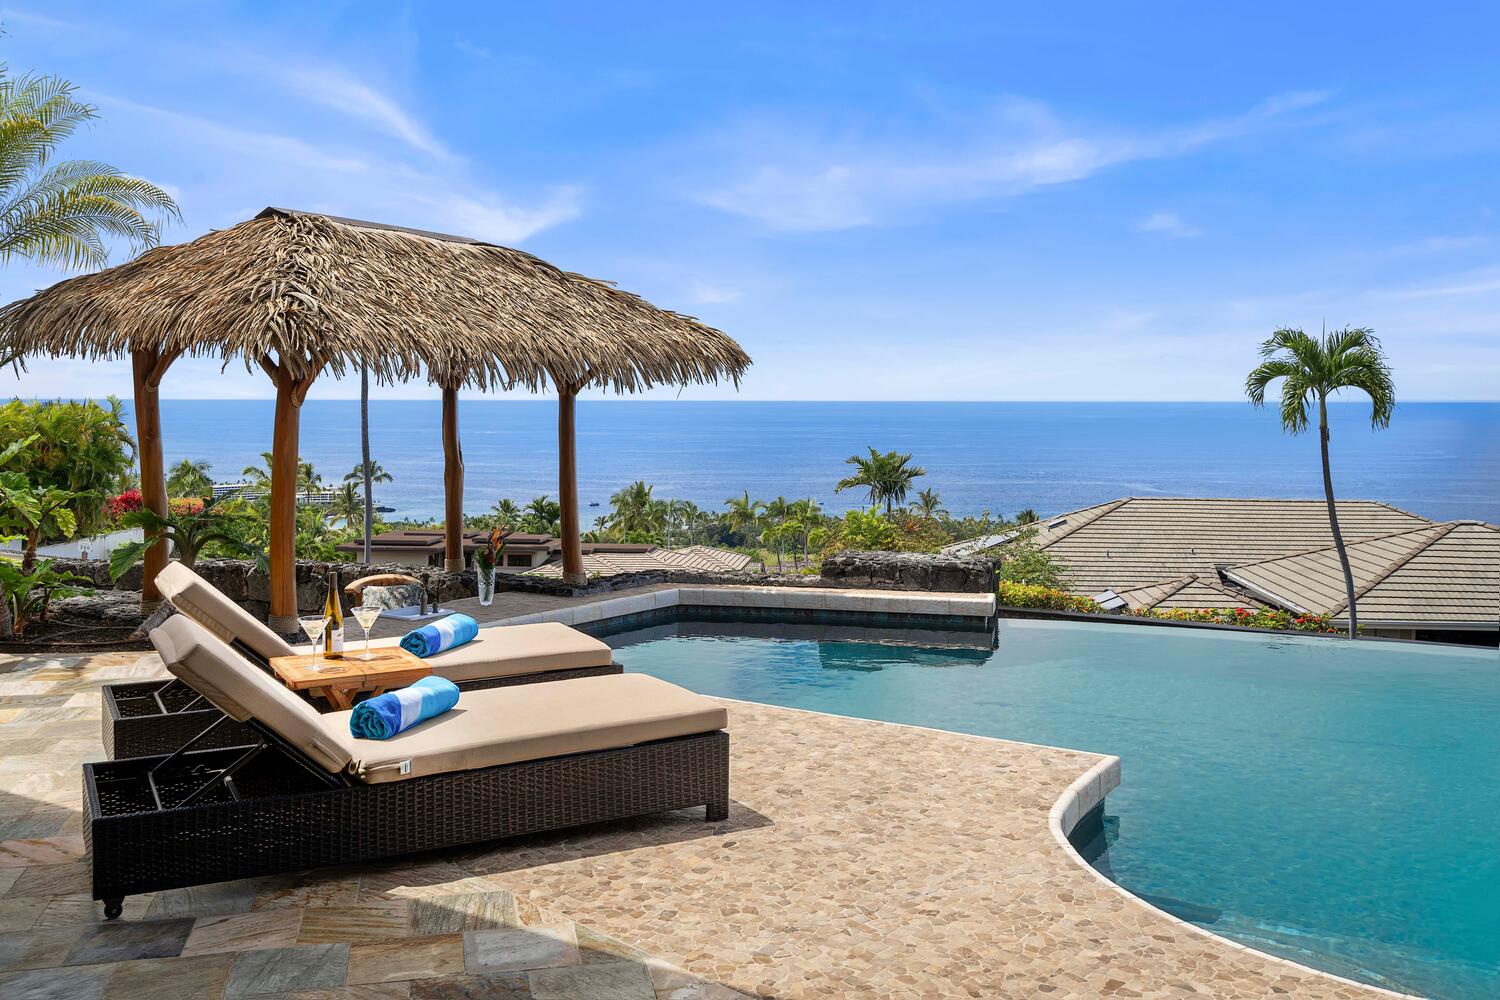 Kailua Kona Vacation Rentals, Island Oasis - Enjoy the pool side bar with swim up seating!